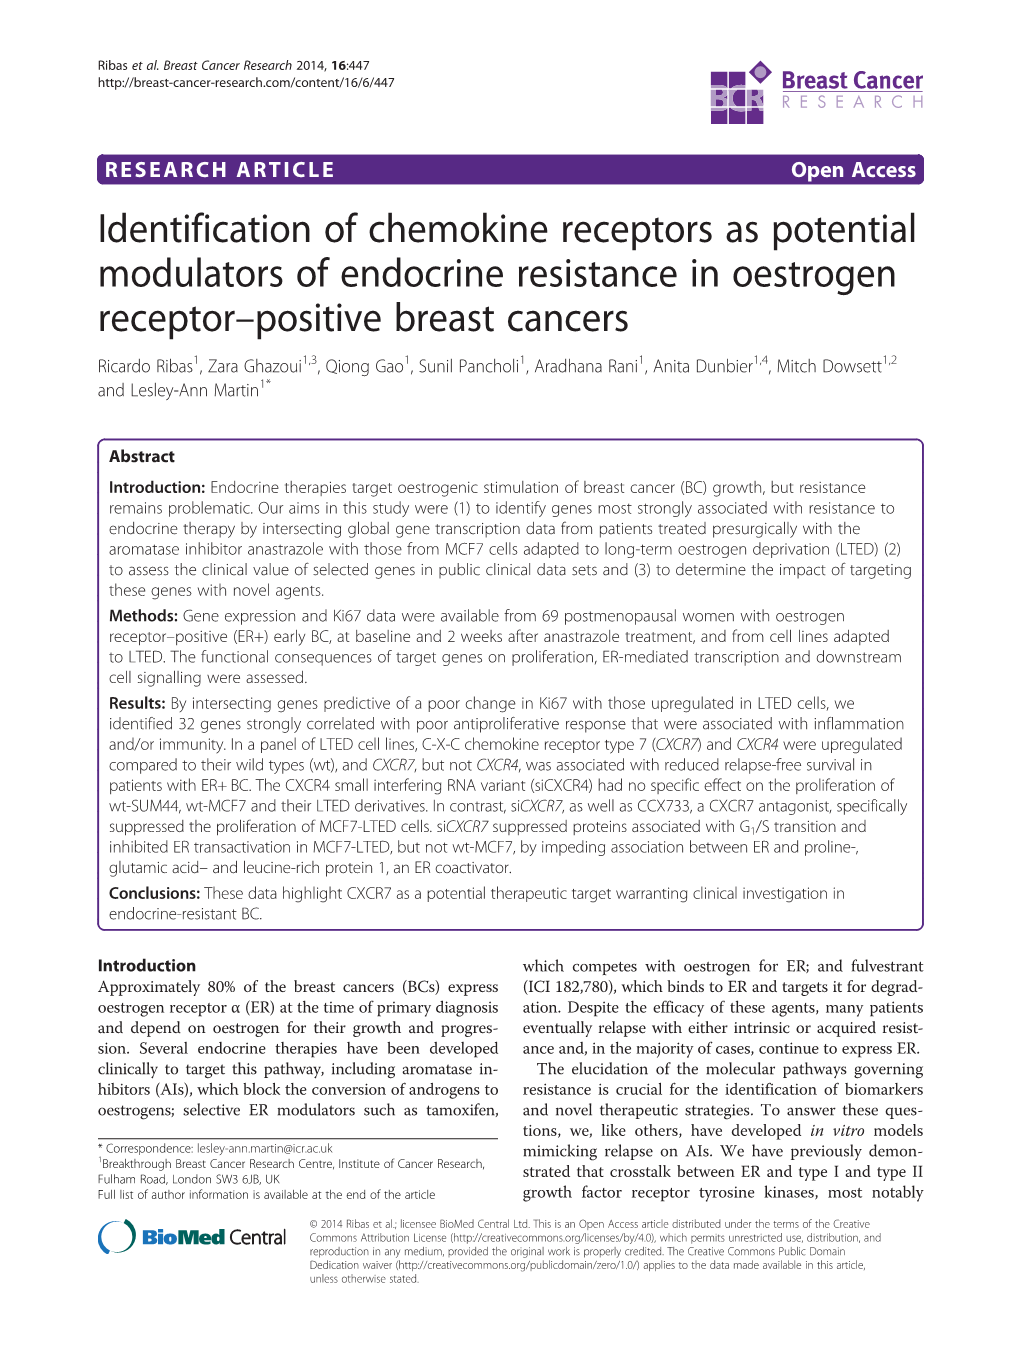 Identification of Chemokine Receptors As Potential Modulators Of